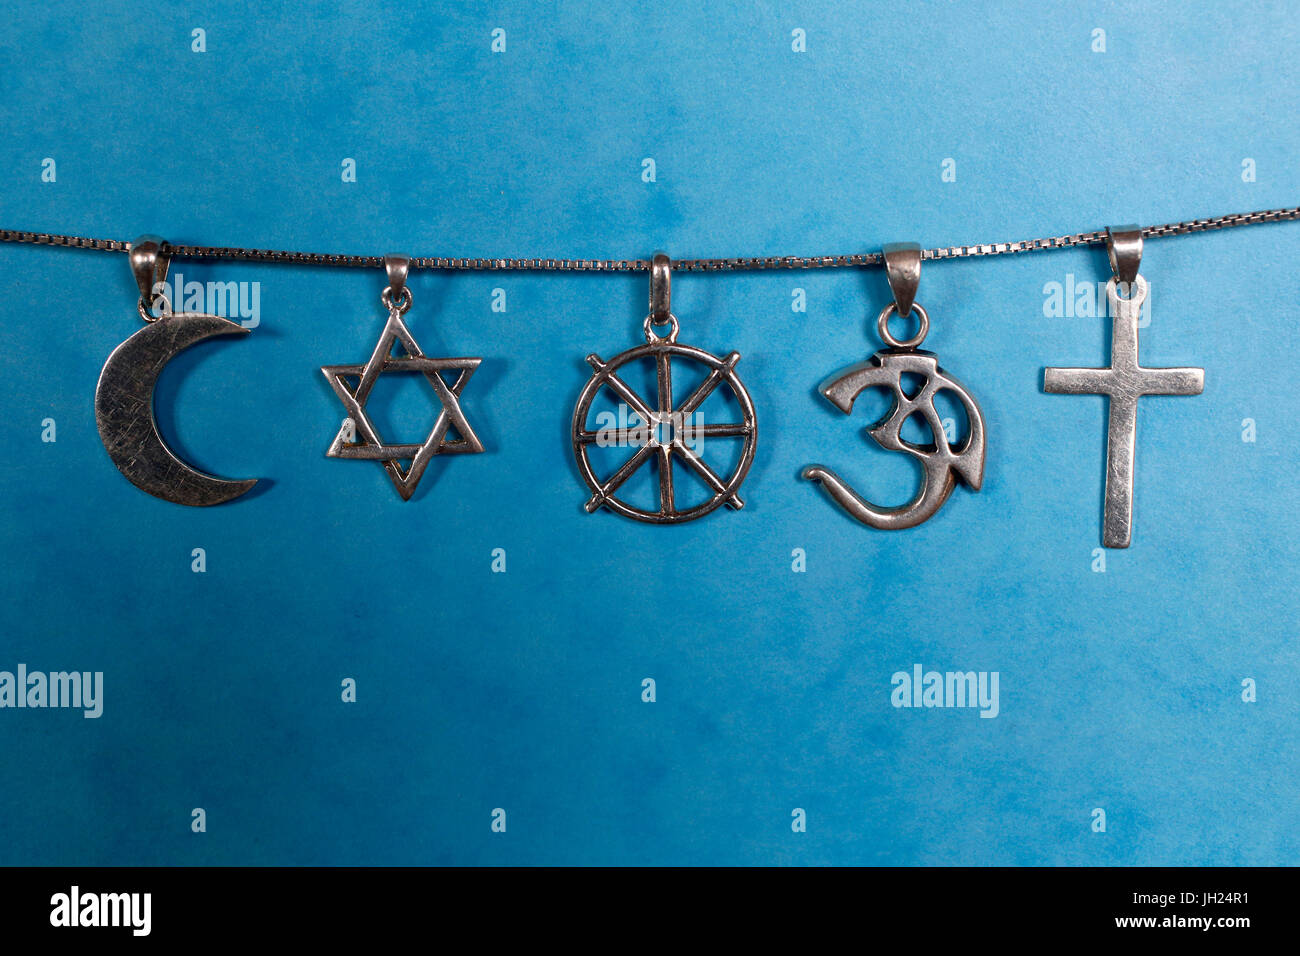 Symbols of islam, judaism, buddhism, hinduism and christianity. Stock Photo